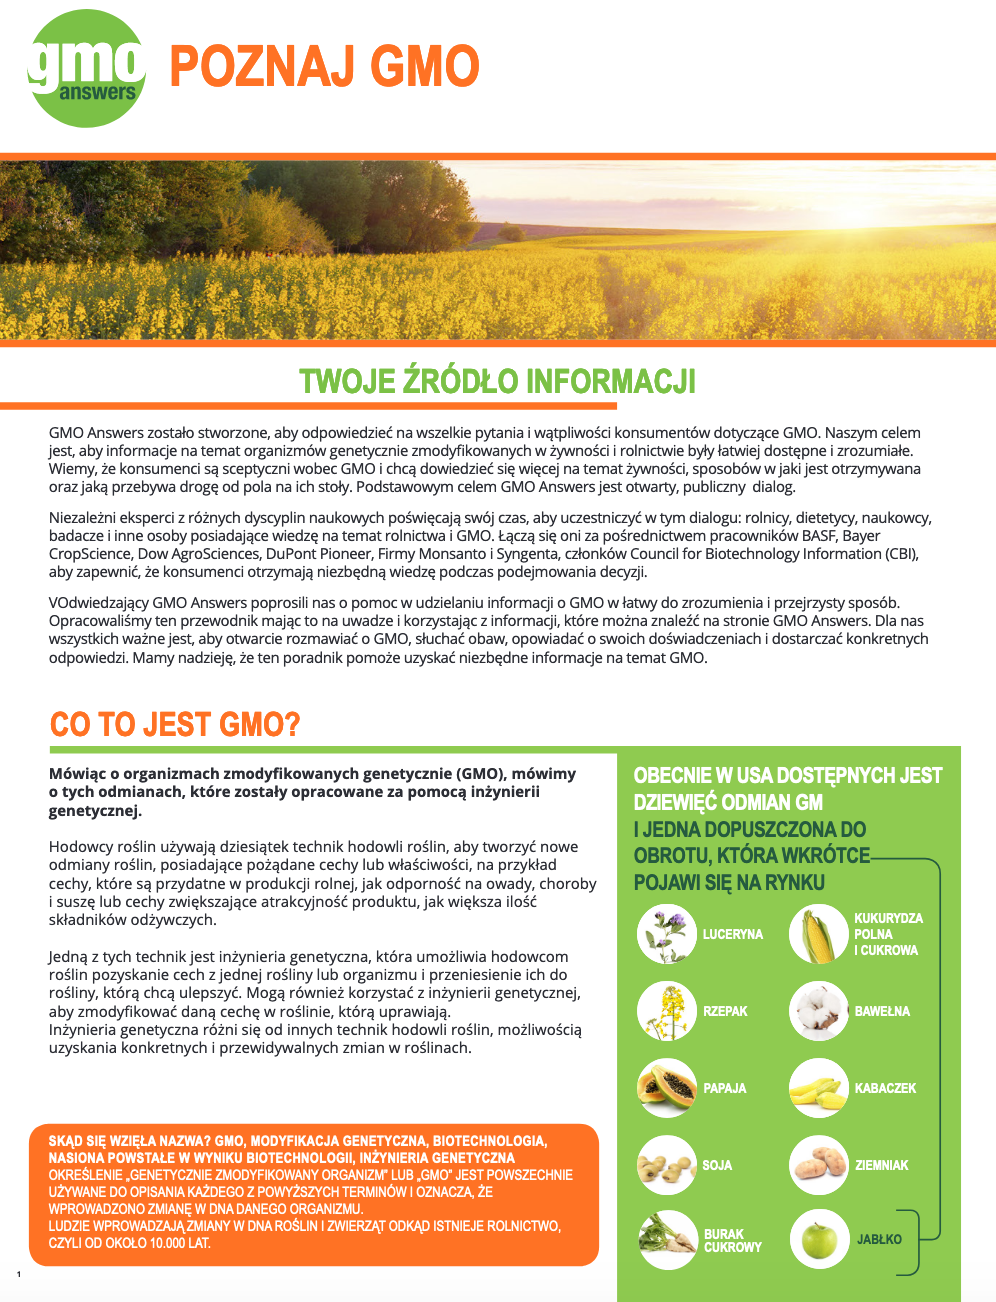 Get to Know GMOs